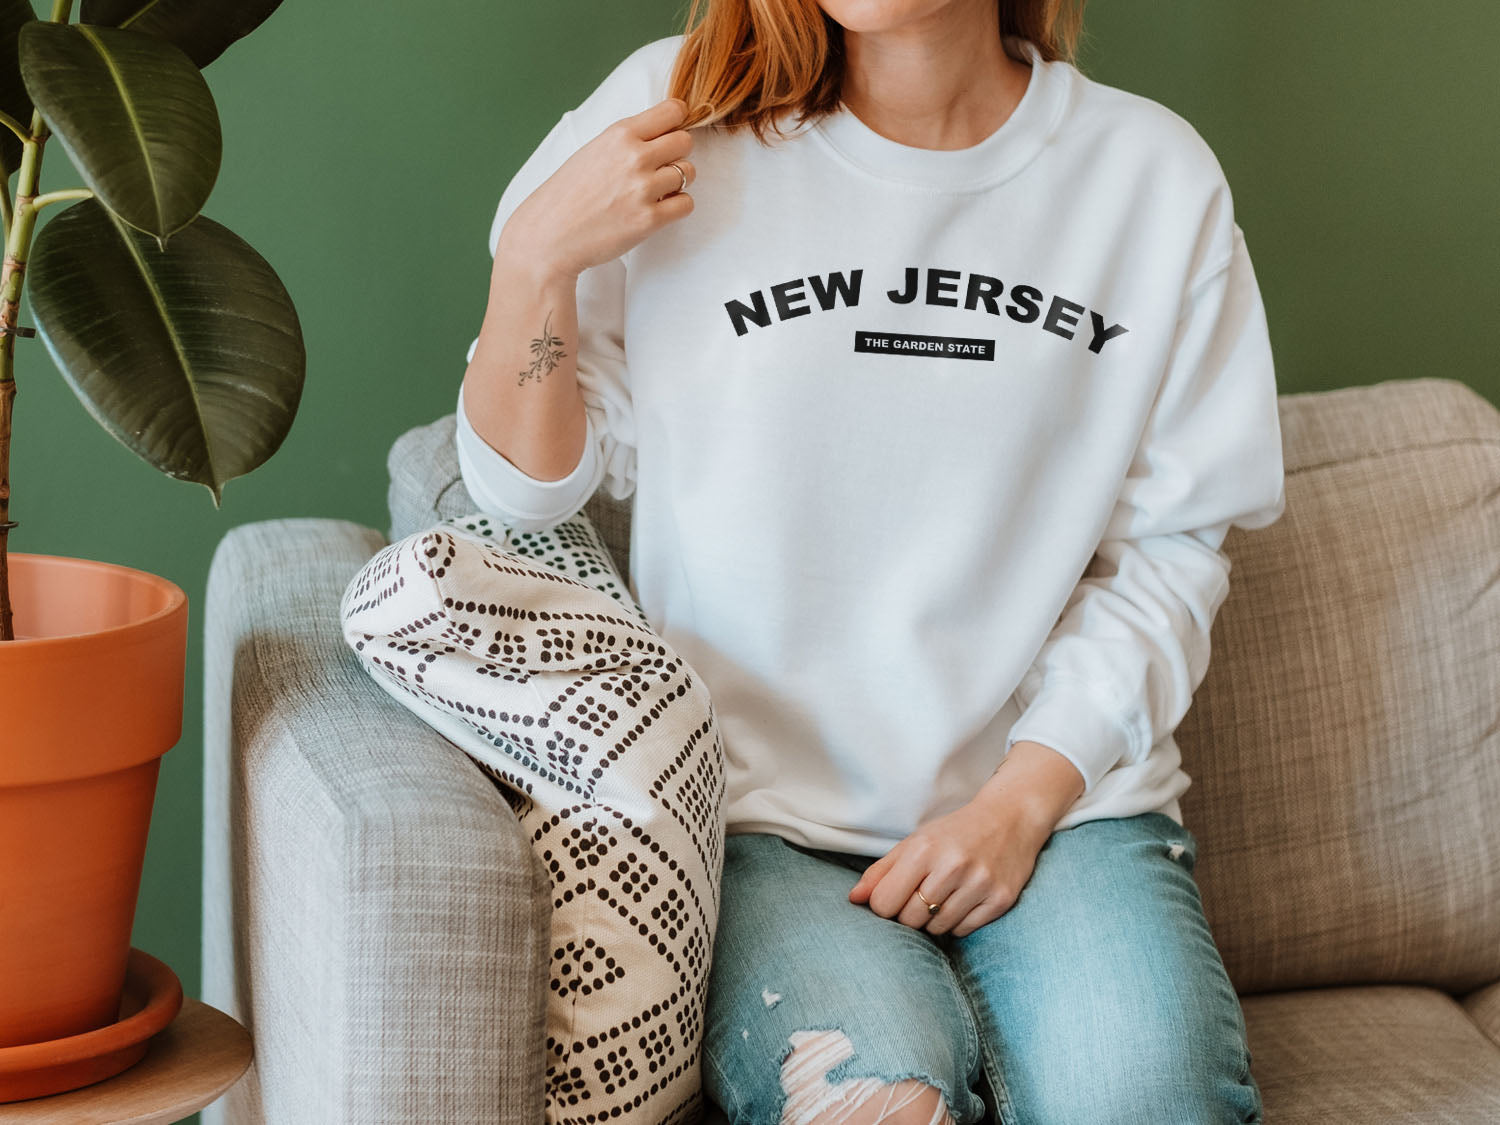 New Jersey The Garden State Sweatshirt - United States Name & Slogan Minimal Design Printed Sweatshirt